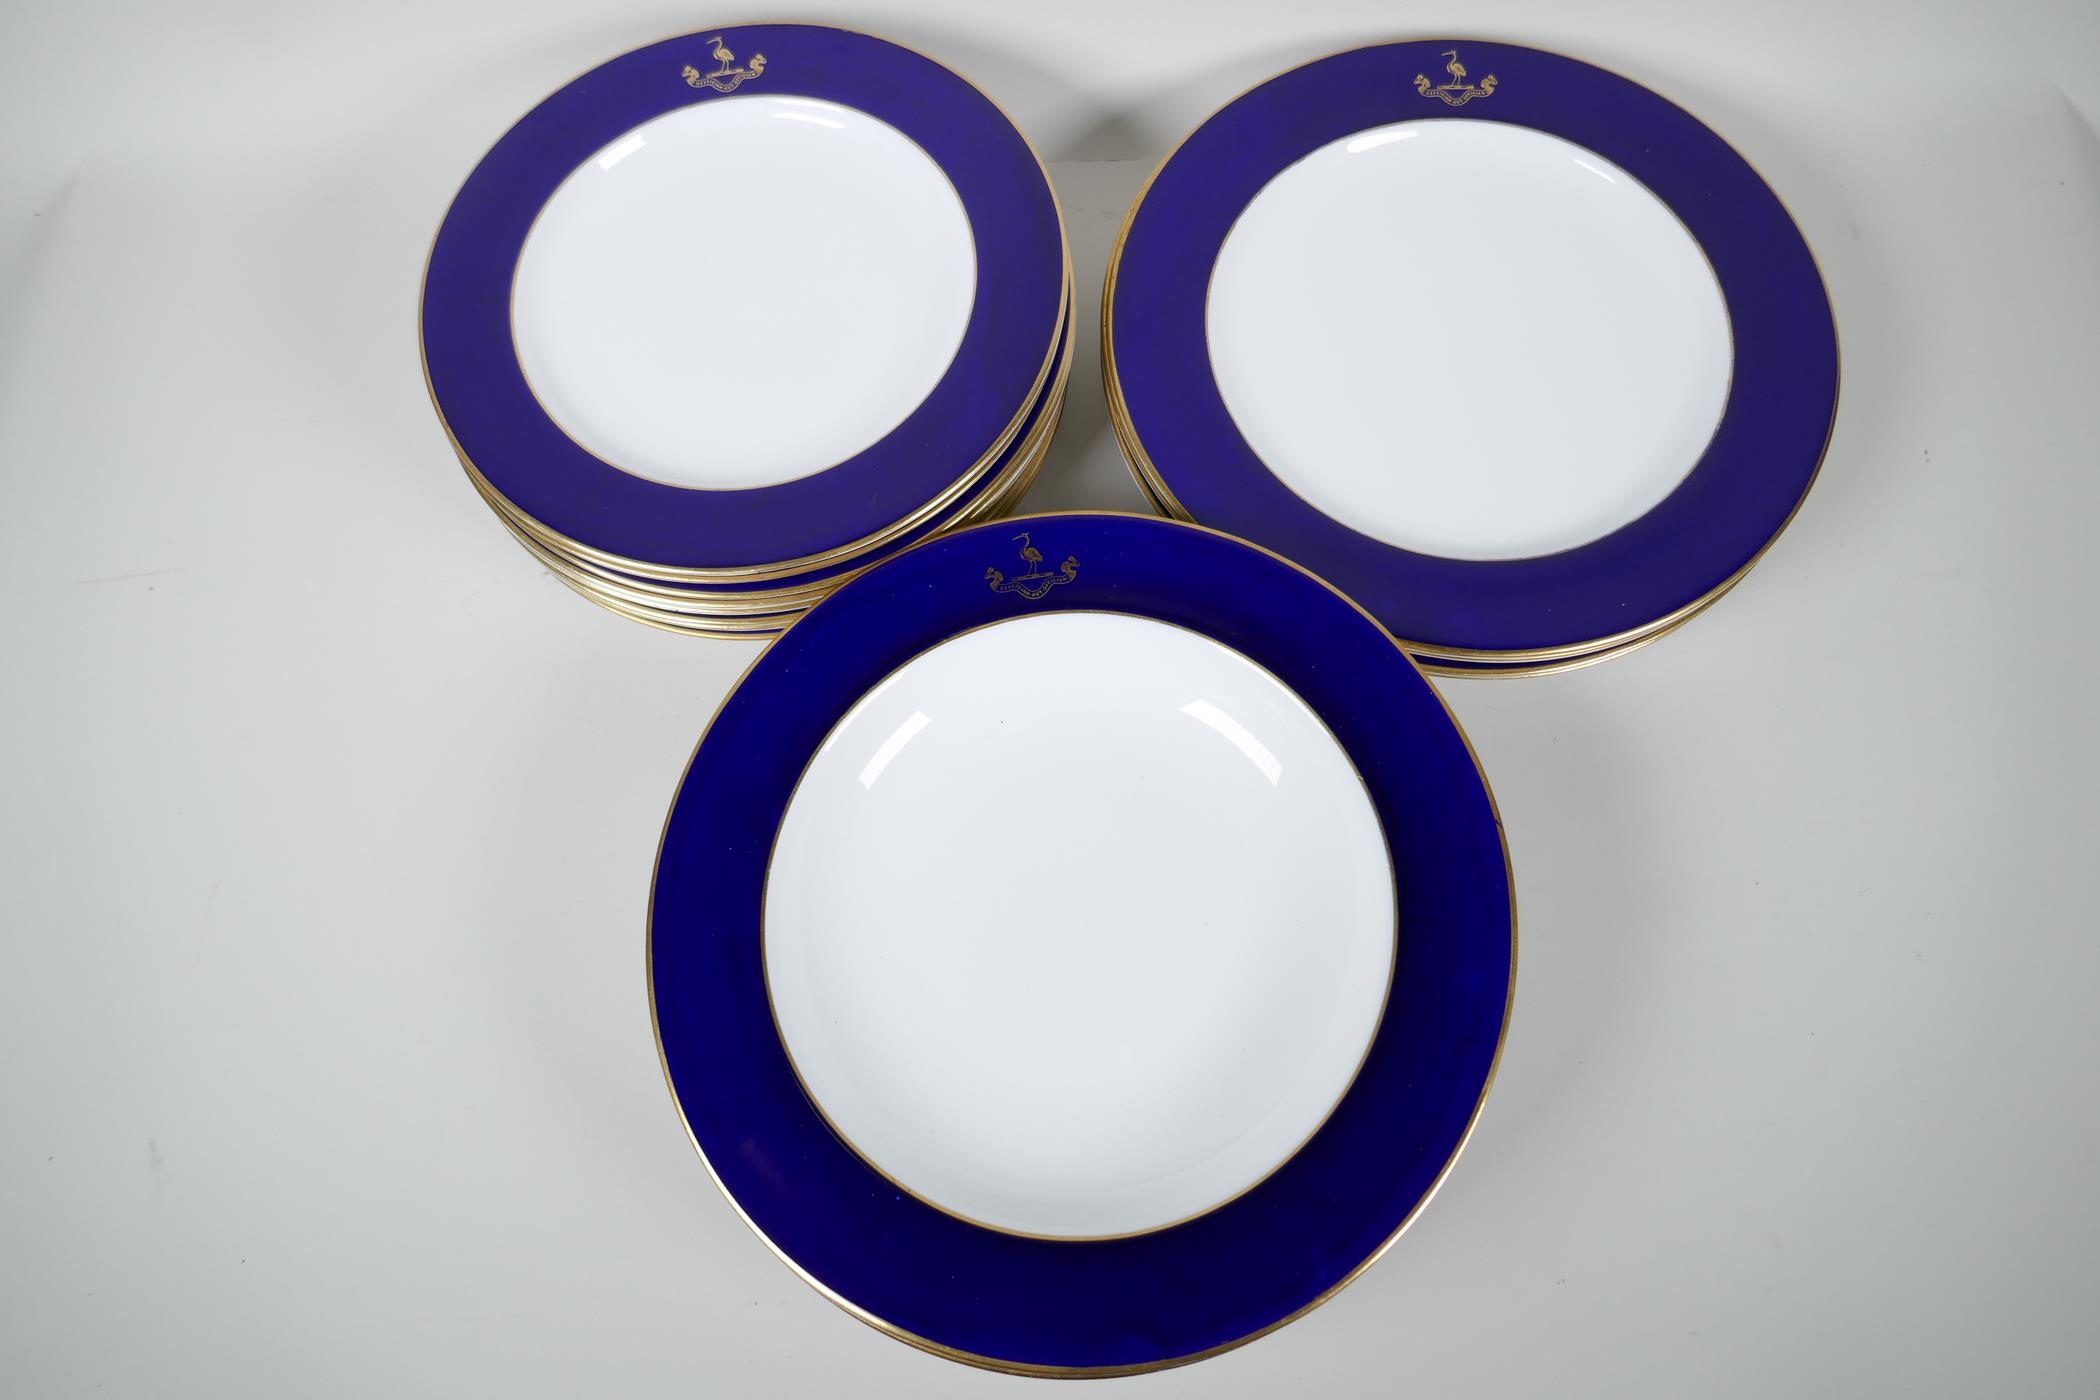 Vintage Royal Worcester cobalt blue and gilt decorated tableware, embellished with a heron crest and